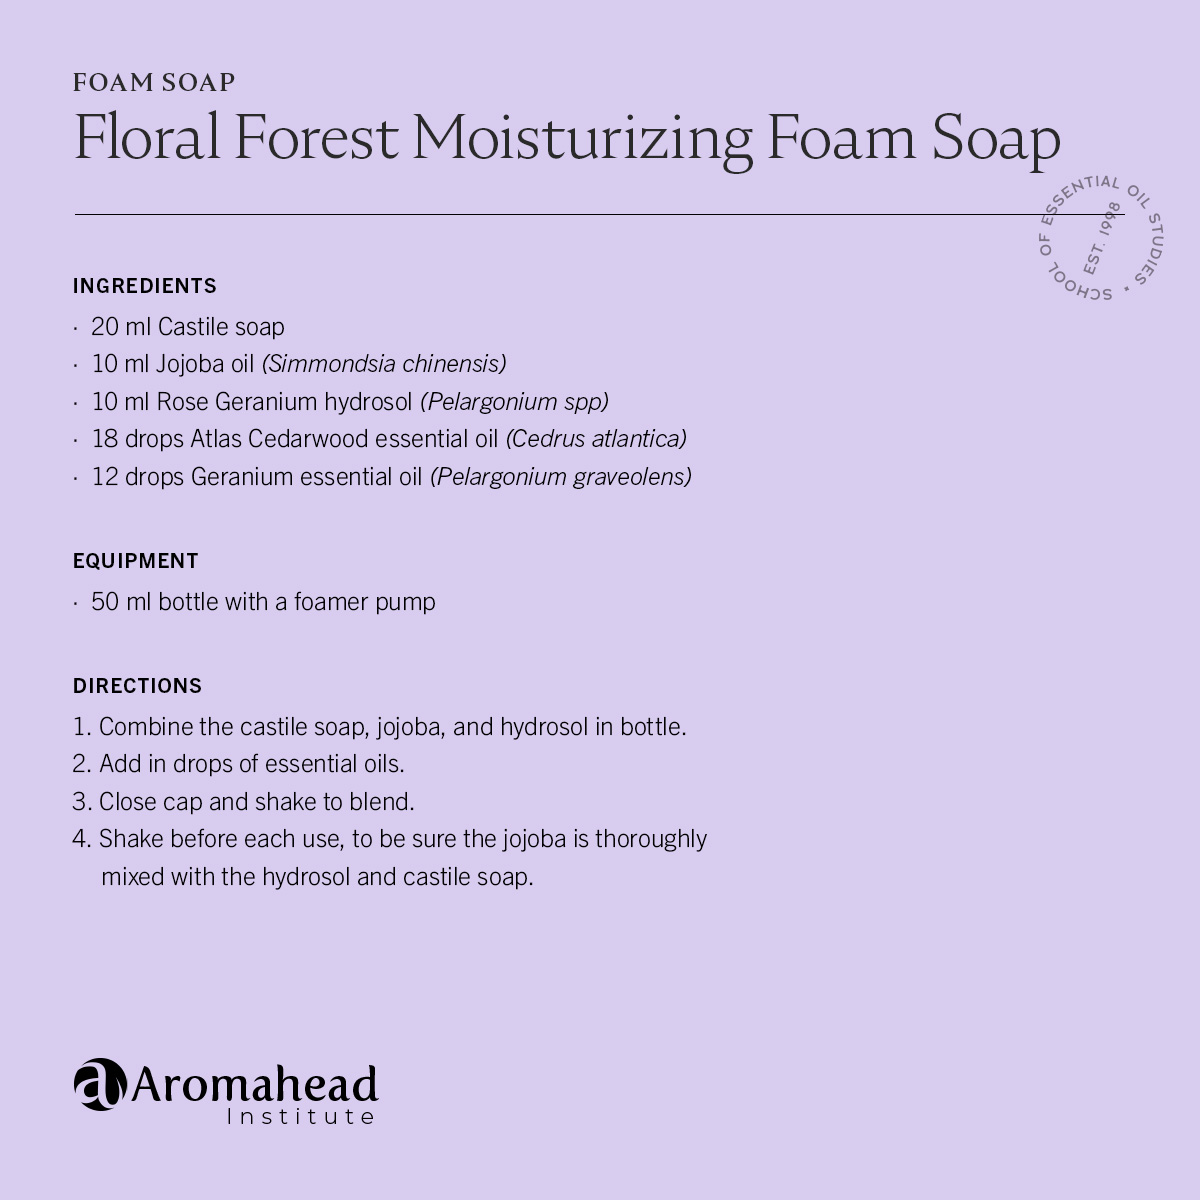 Floral Forest Moisturizing Foam Soap